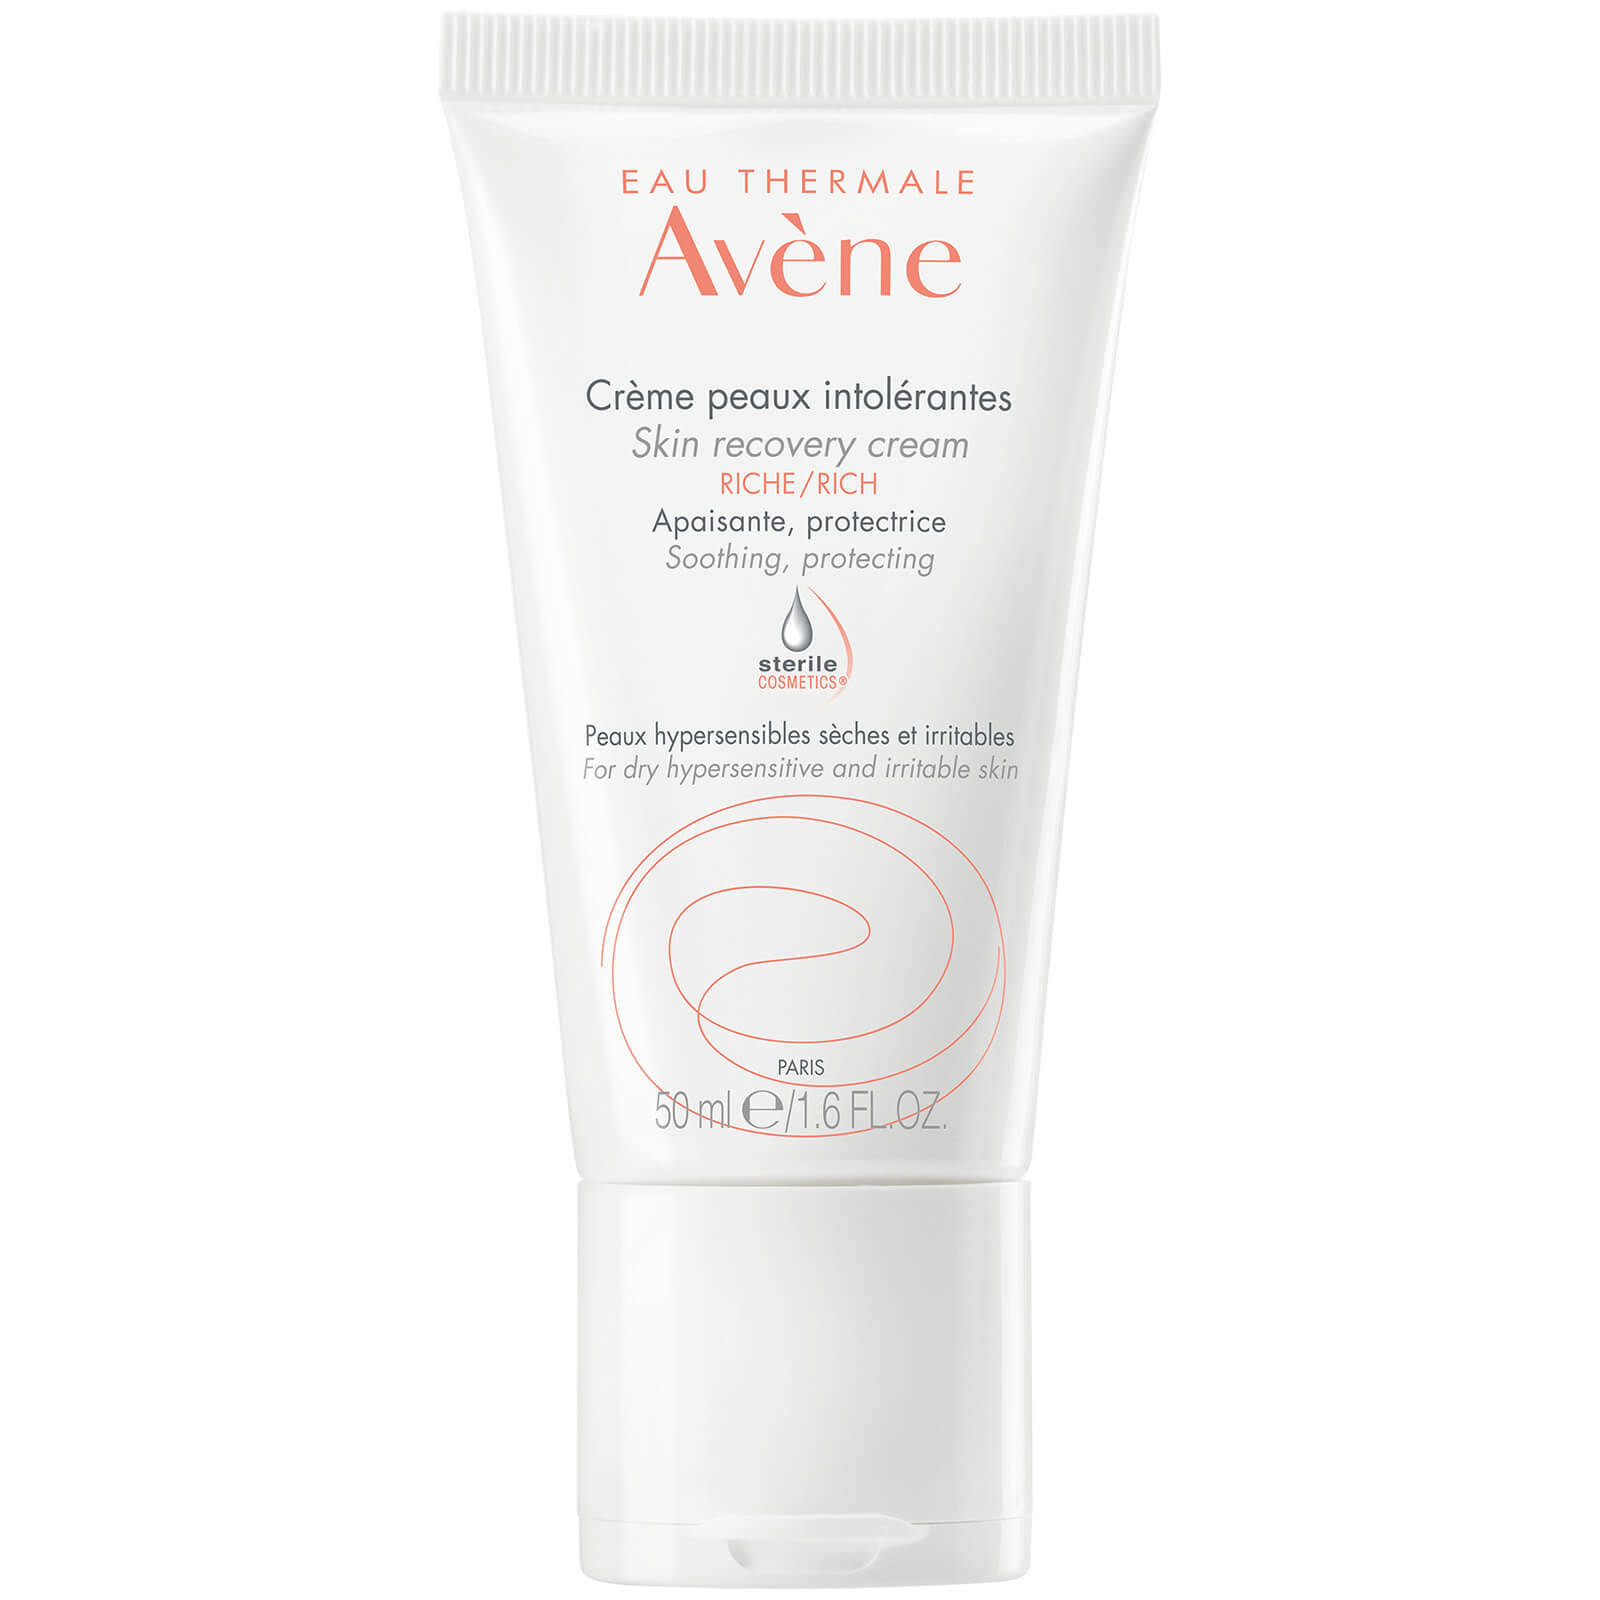 Avene - skin recovery cream rich 50 ml